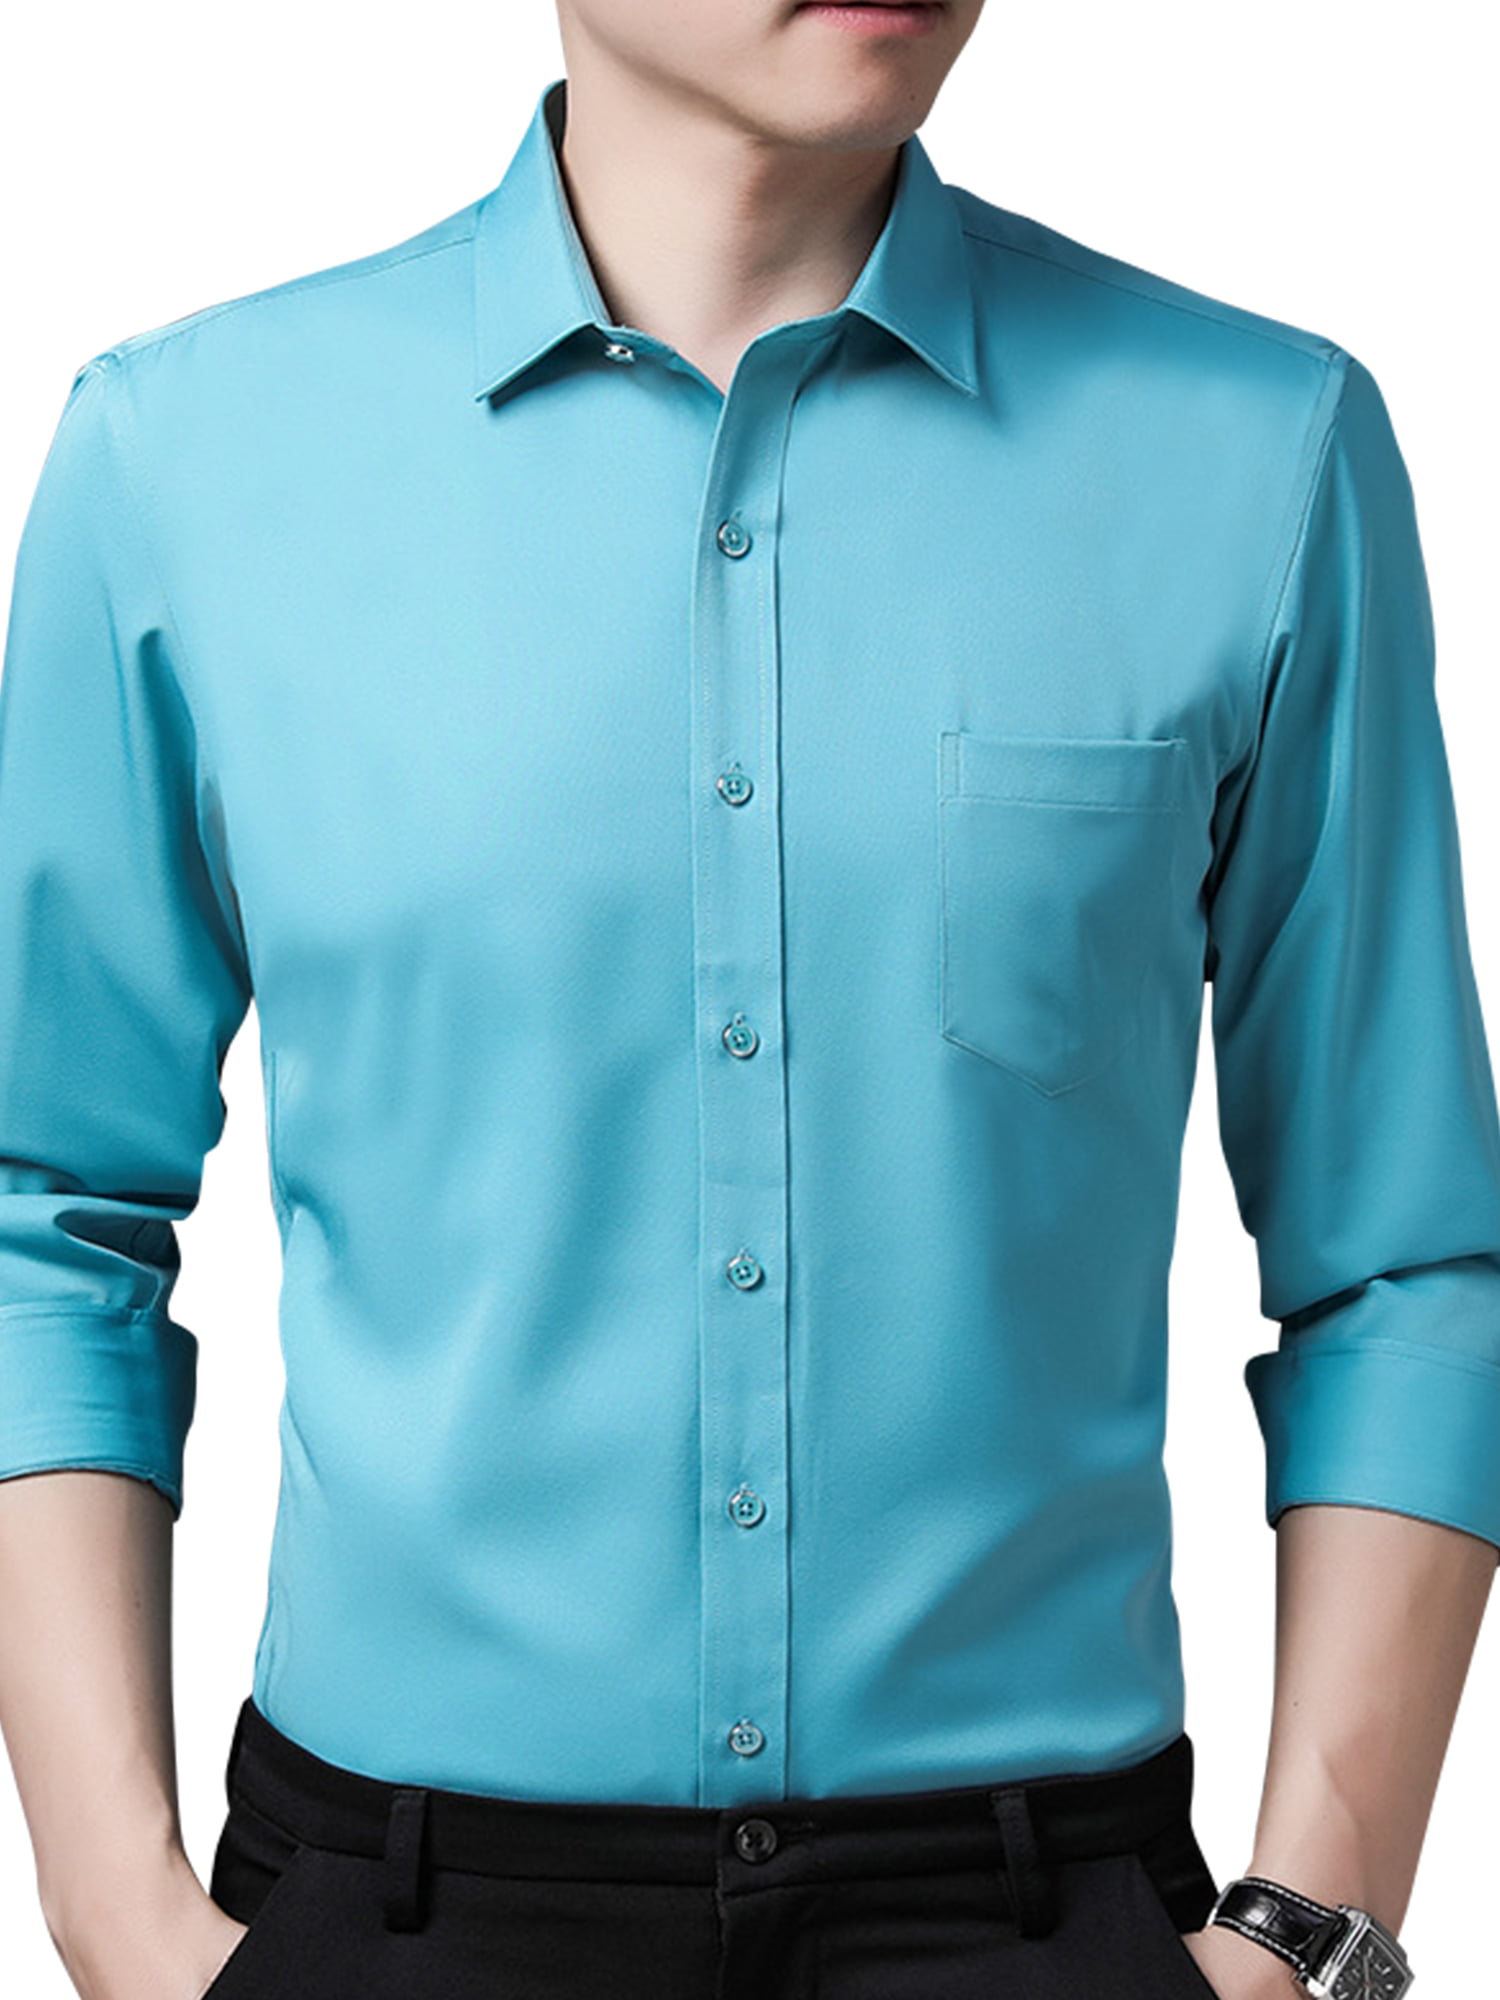 Coersd Men Casual 3D Printing Vintage Slim Long Sleeve Dress Shirt Blouse Tops 